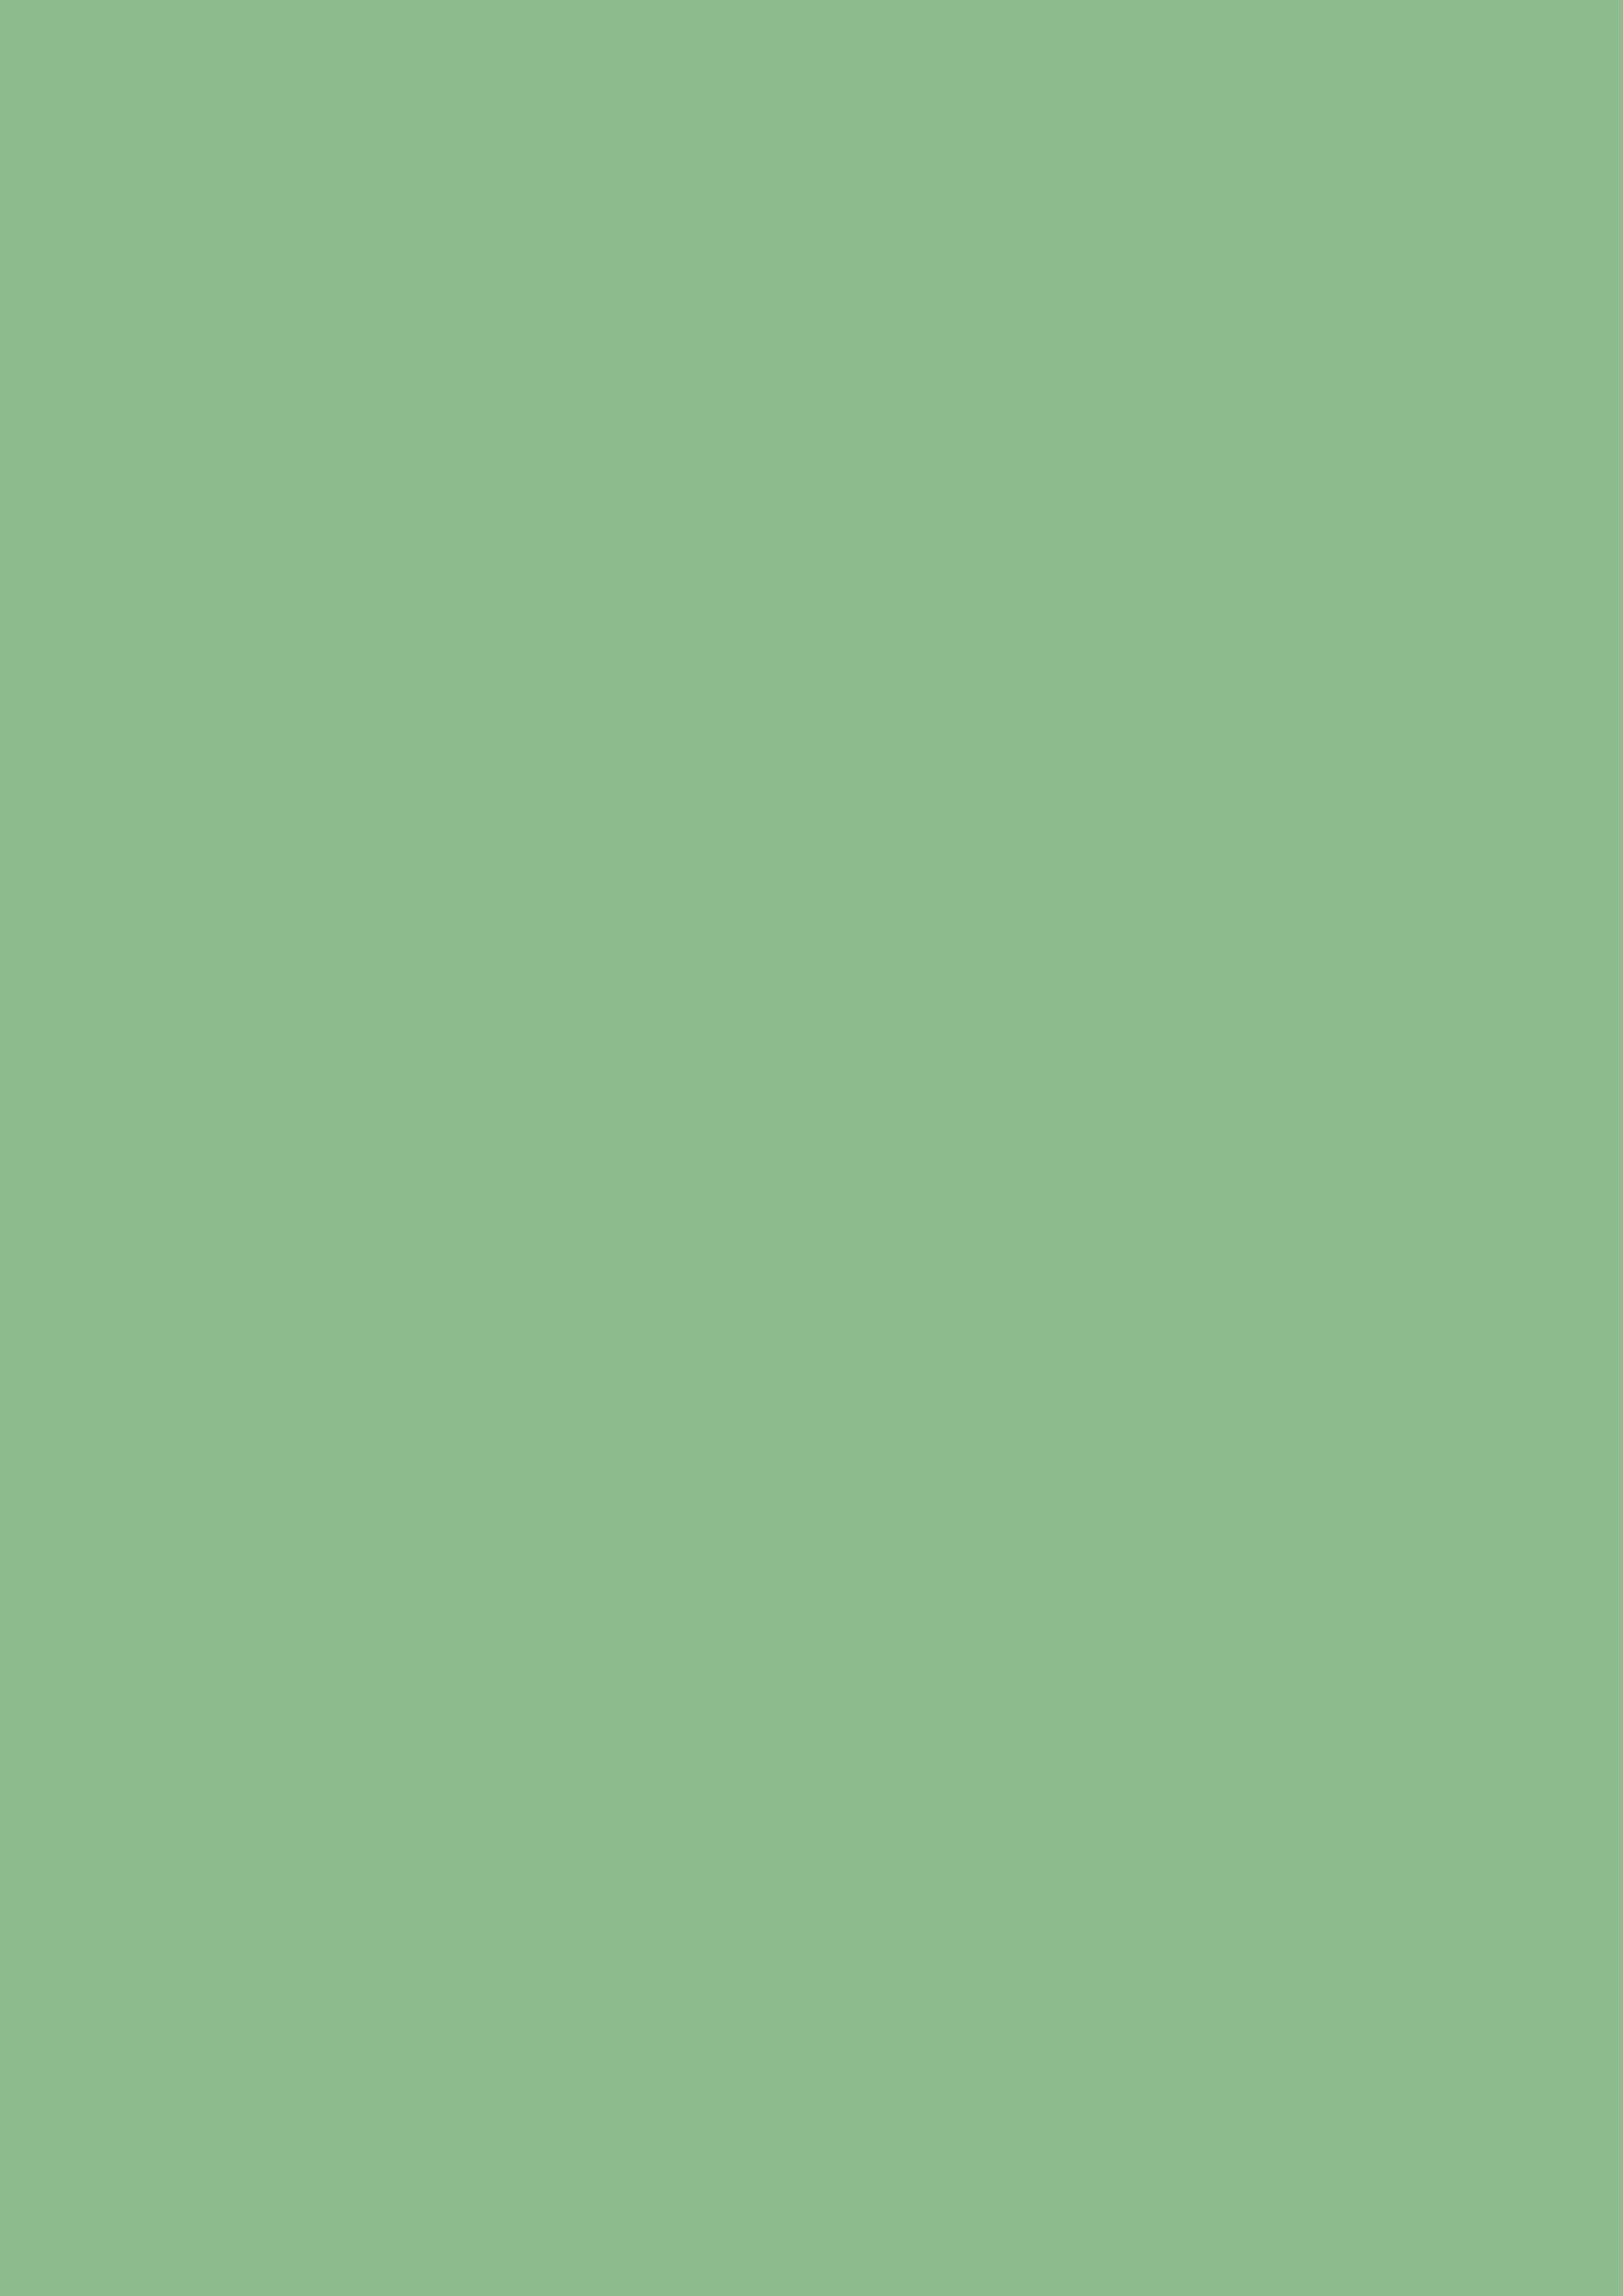 2480x3508 Dark Sea Green Solid Color Background